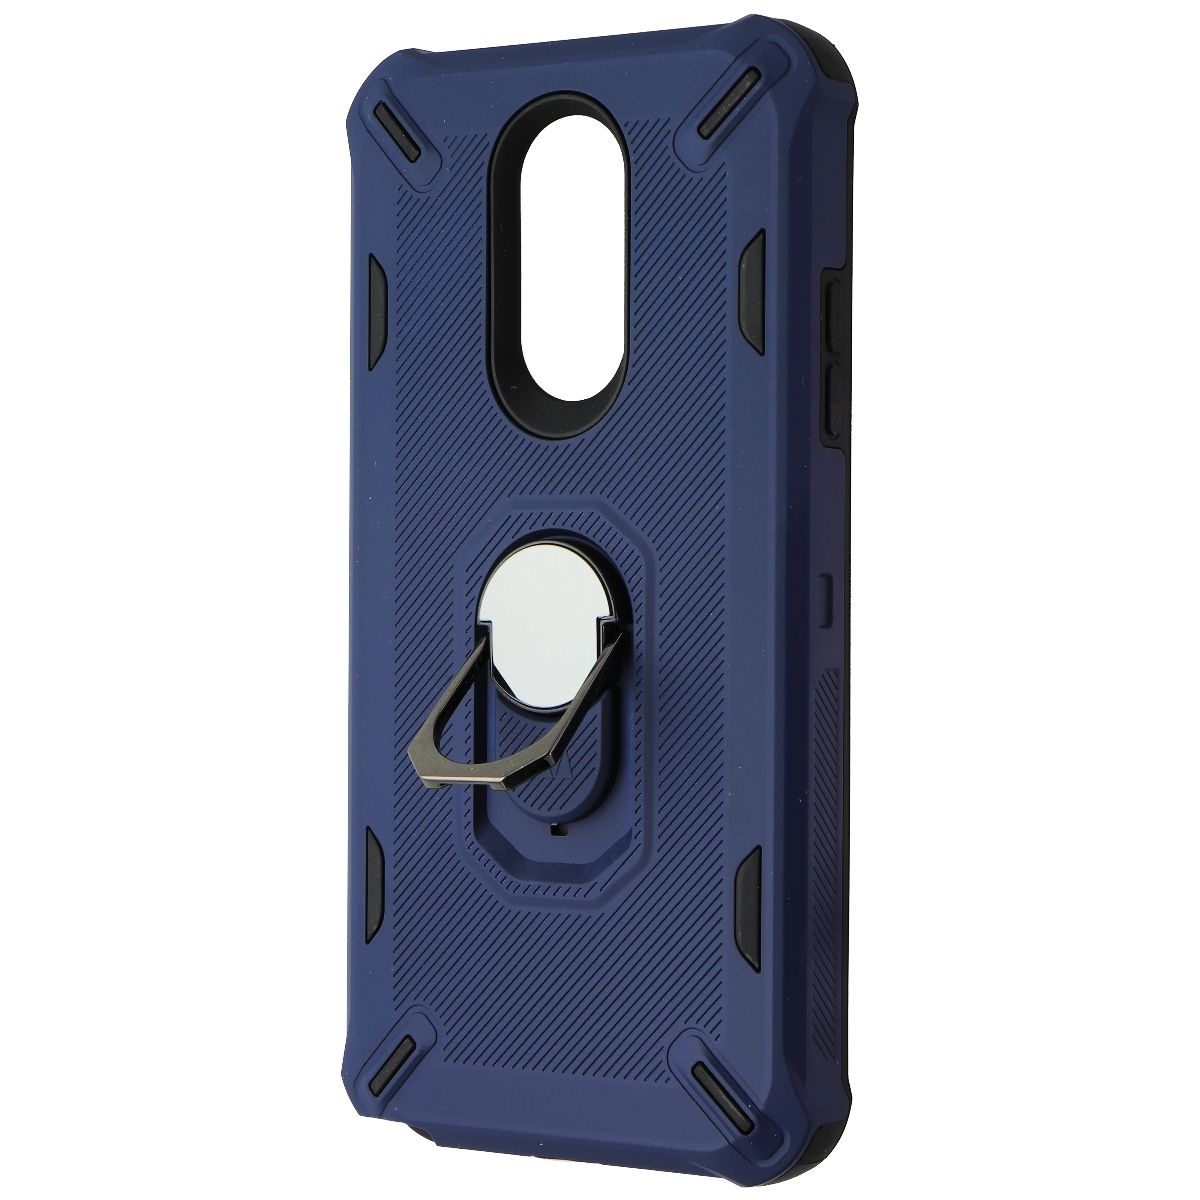 MyBat Hybrid Series Protective Phone Case For LG Stylo 5 - Blue (Refurbished)